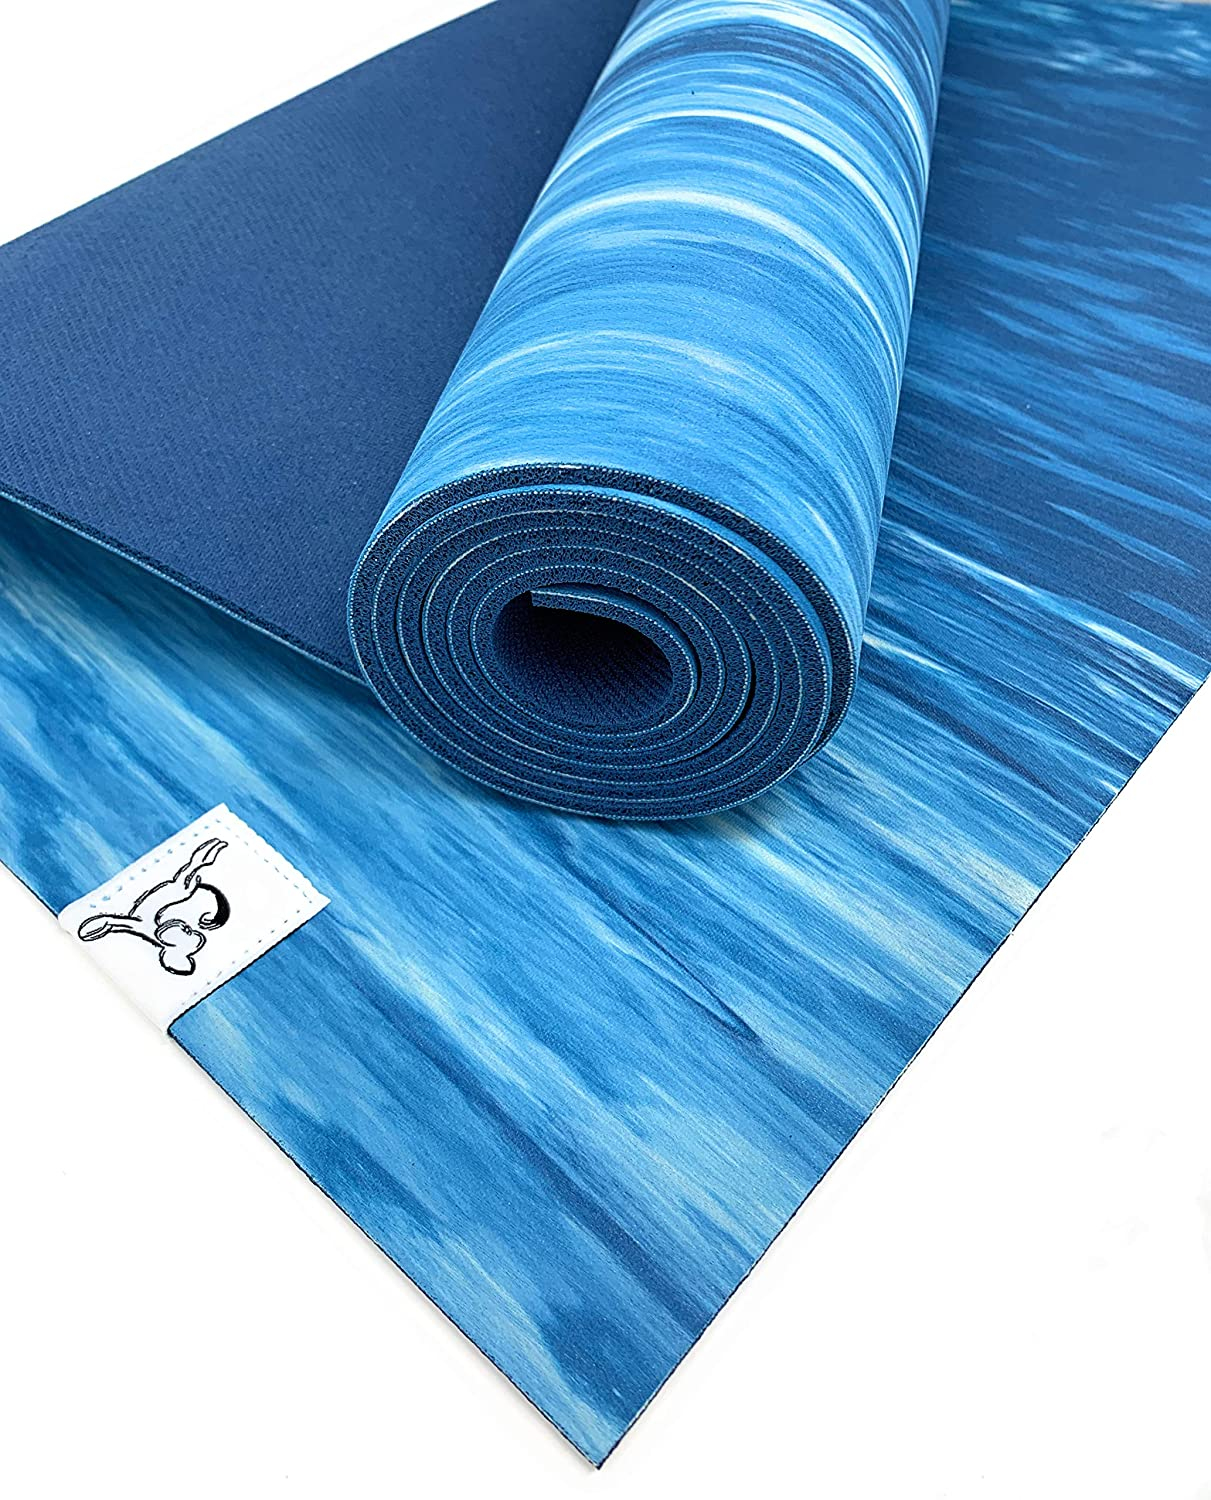 eco friendly yoga mats to buy - Tiggar Yoga mat